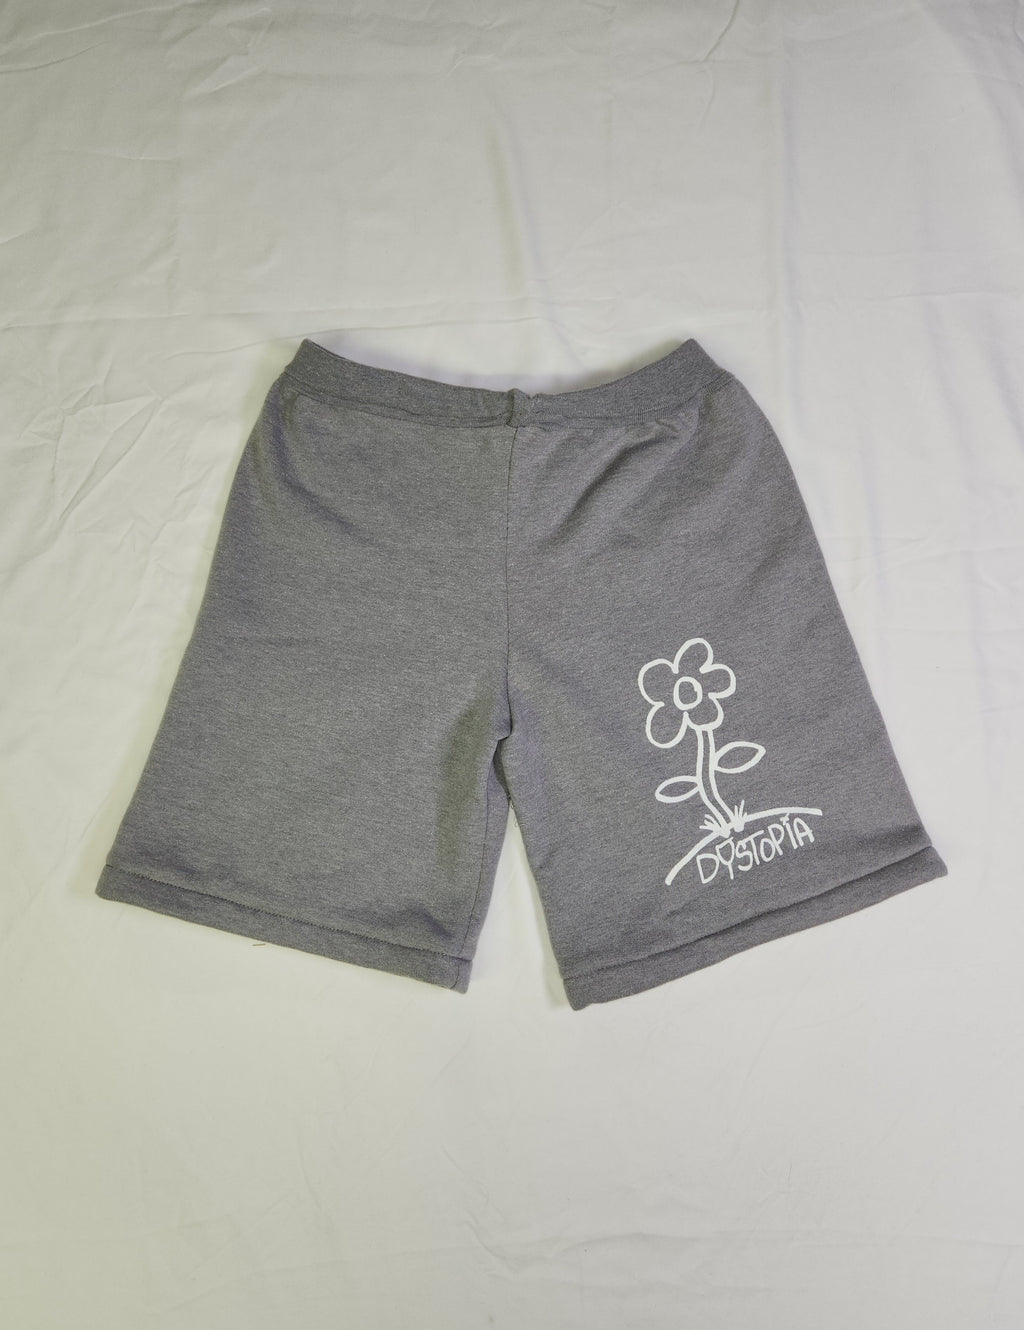 Handmade Upcycled Shorts